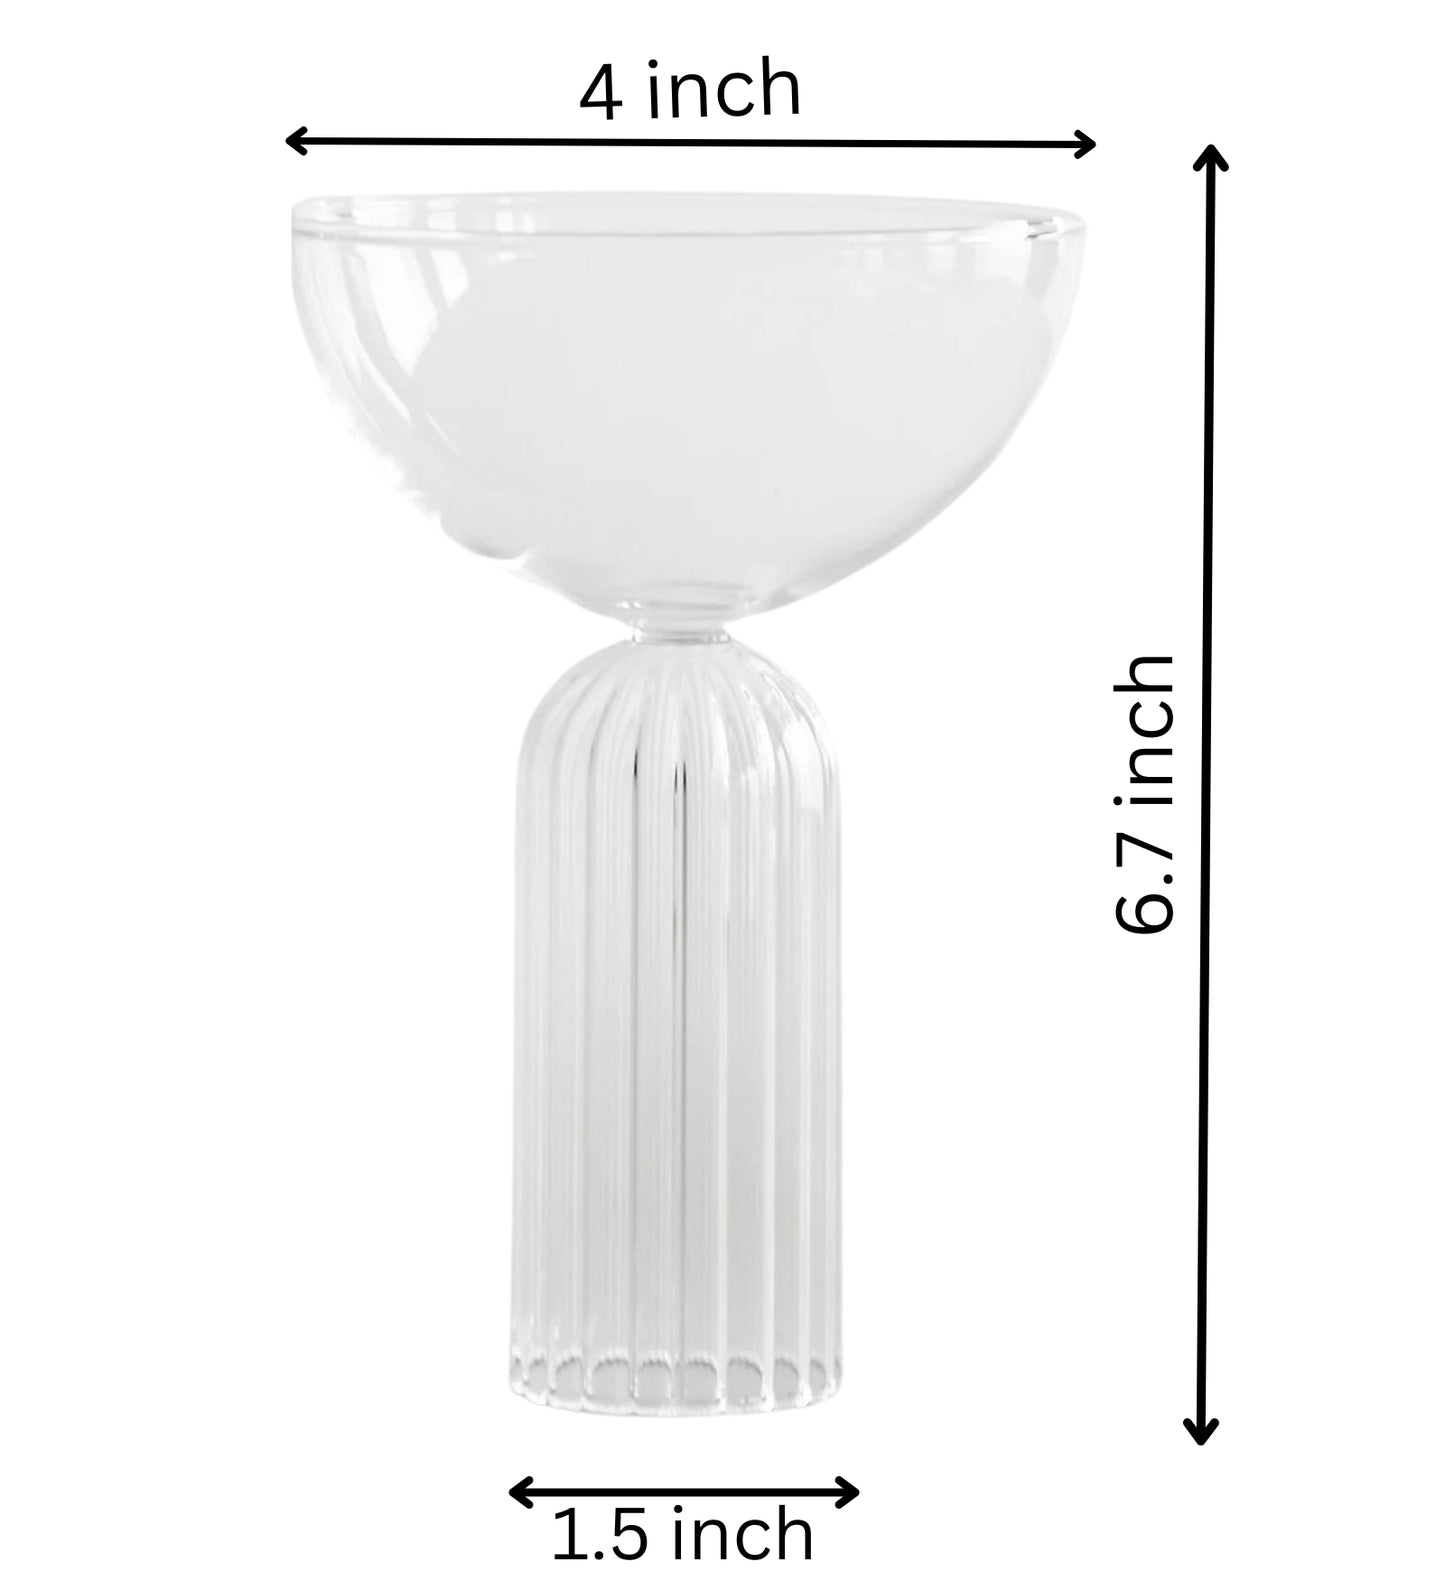 Ribbed Stem Cocktail Glass 250 ML melbify